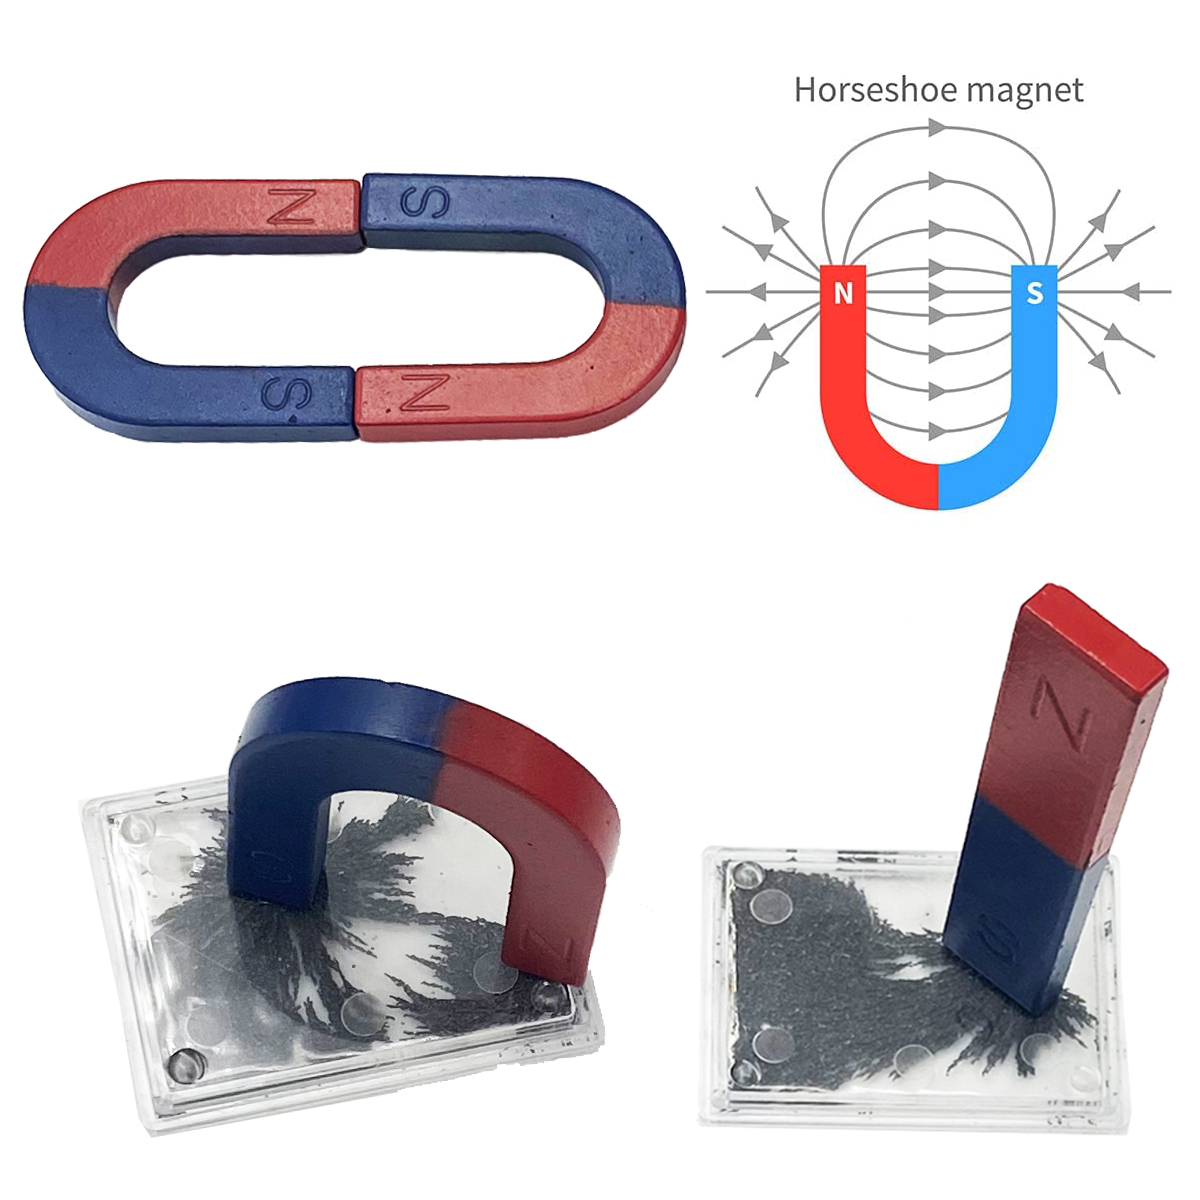 alnico horse shoe magnets educational horseshoe and bar magnet